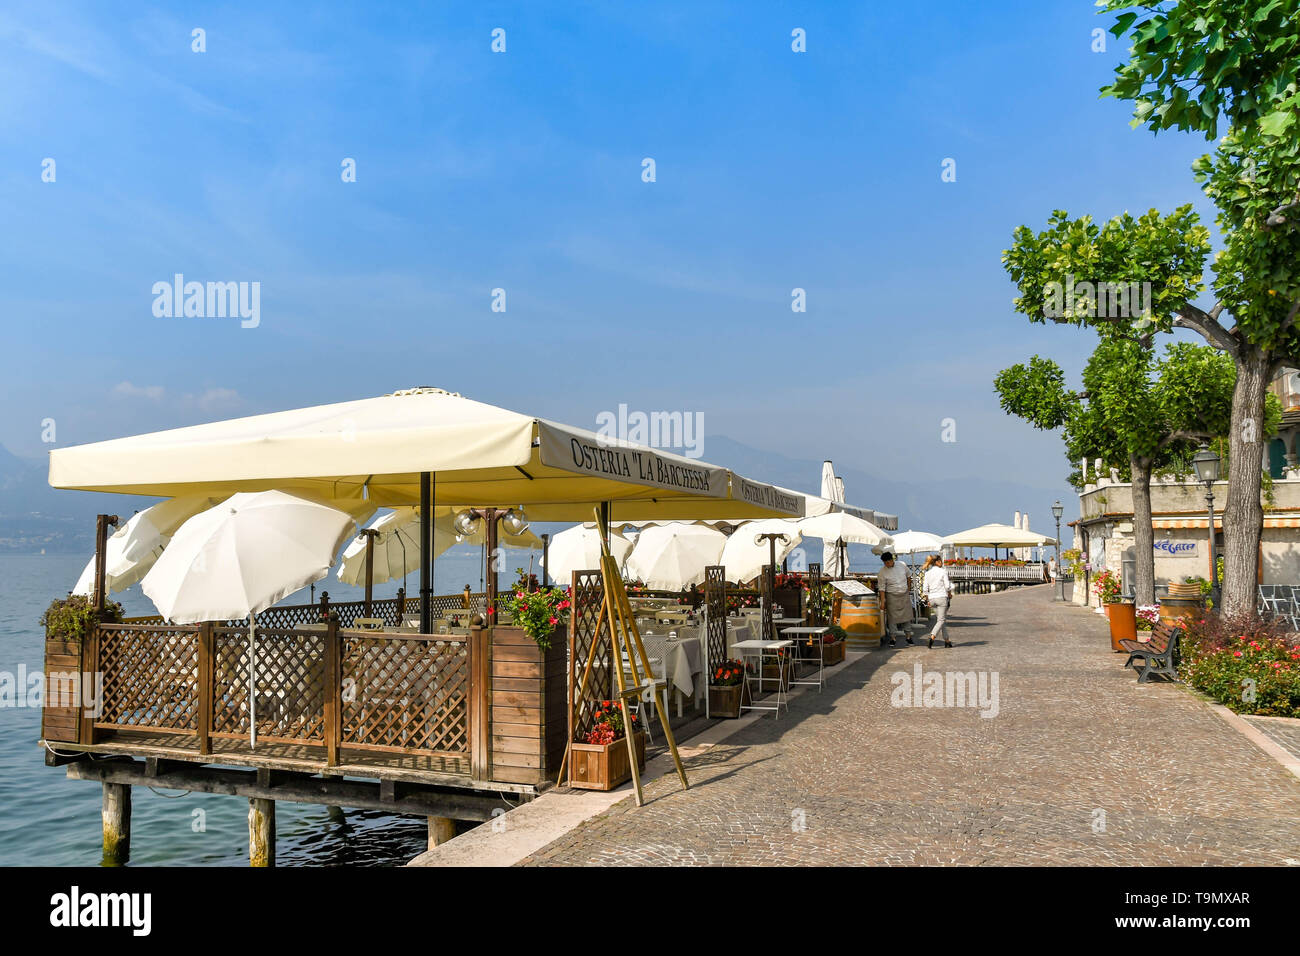 TORRI DEL BENACO, LAKE GARDA, ITALY - SEPTEMBER 2018: Outdoor dining area with sun canopy at a restaurant on the promenade on the edge of Lake Garda Stock Photo